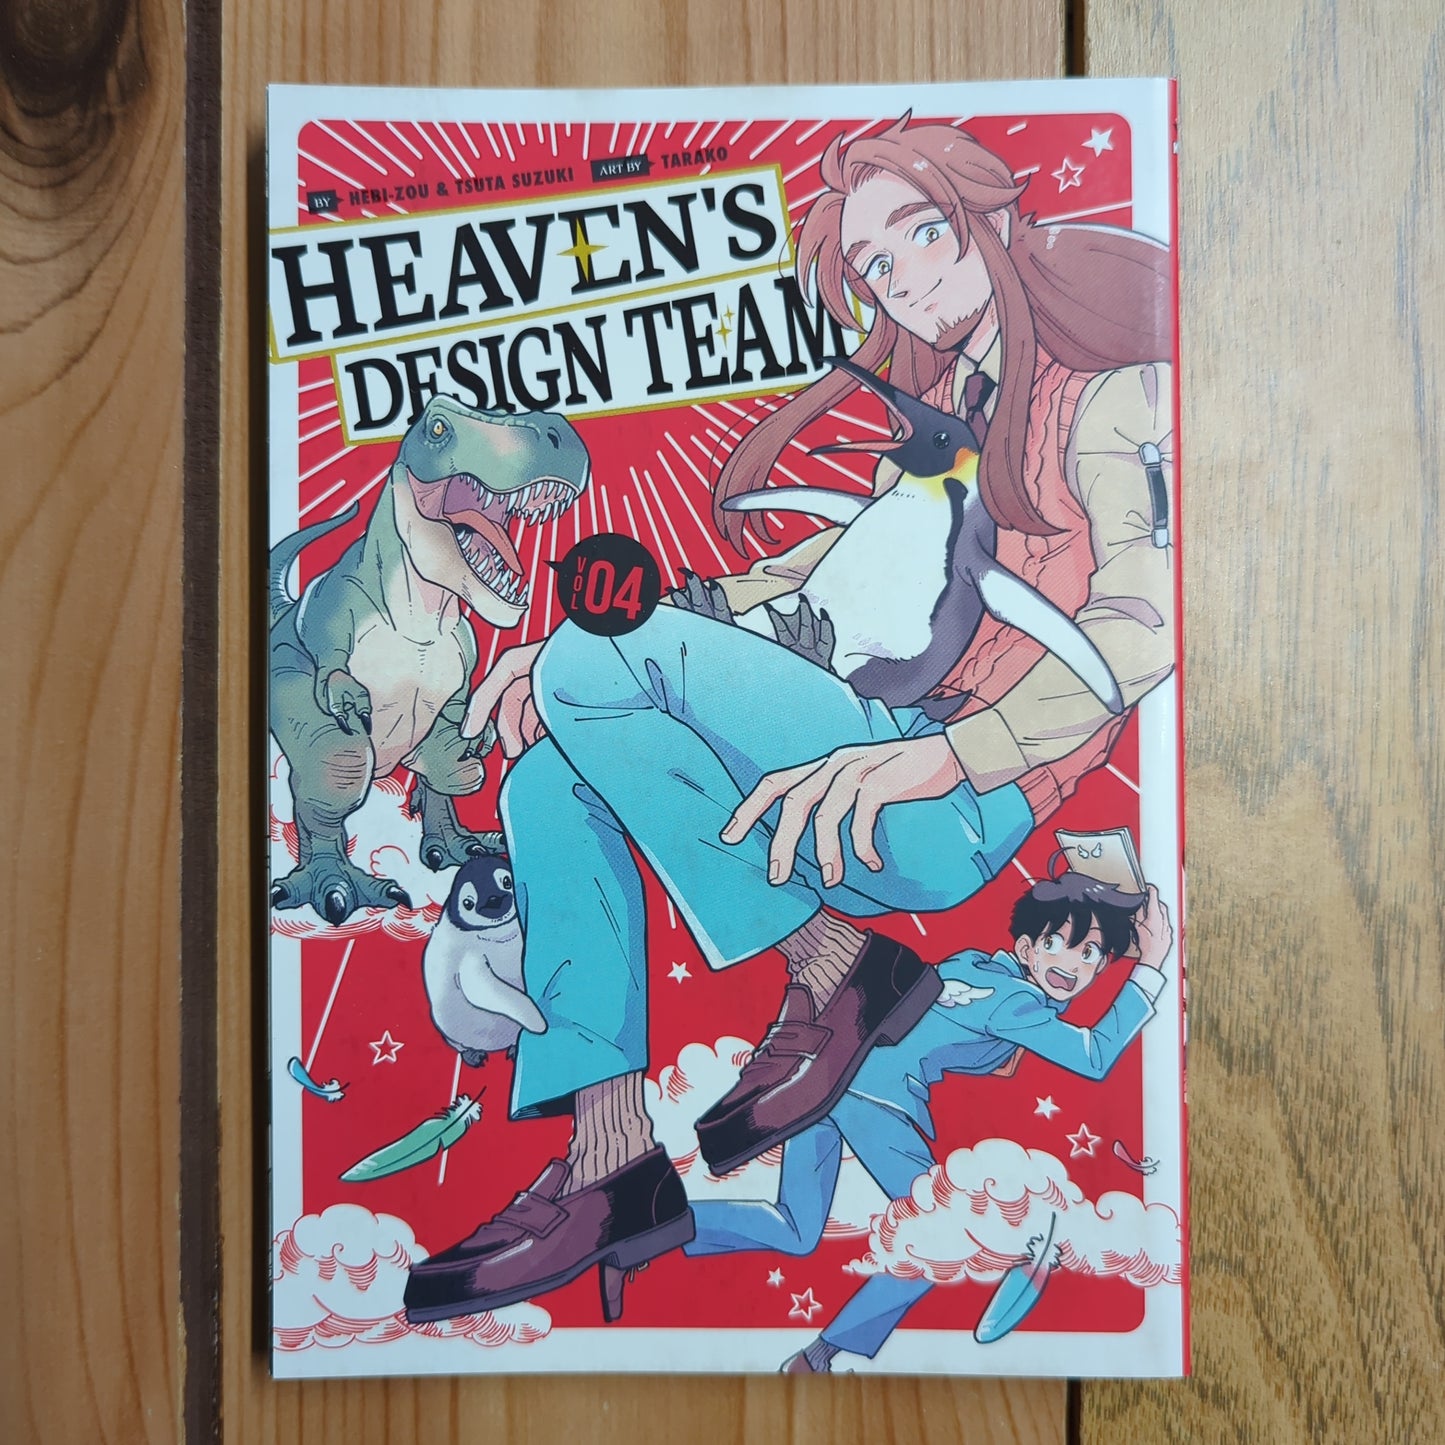 Heaven's Design Team Vol 4